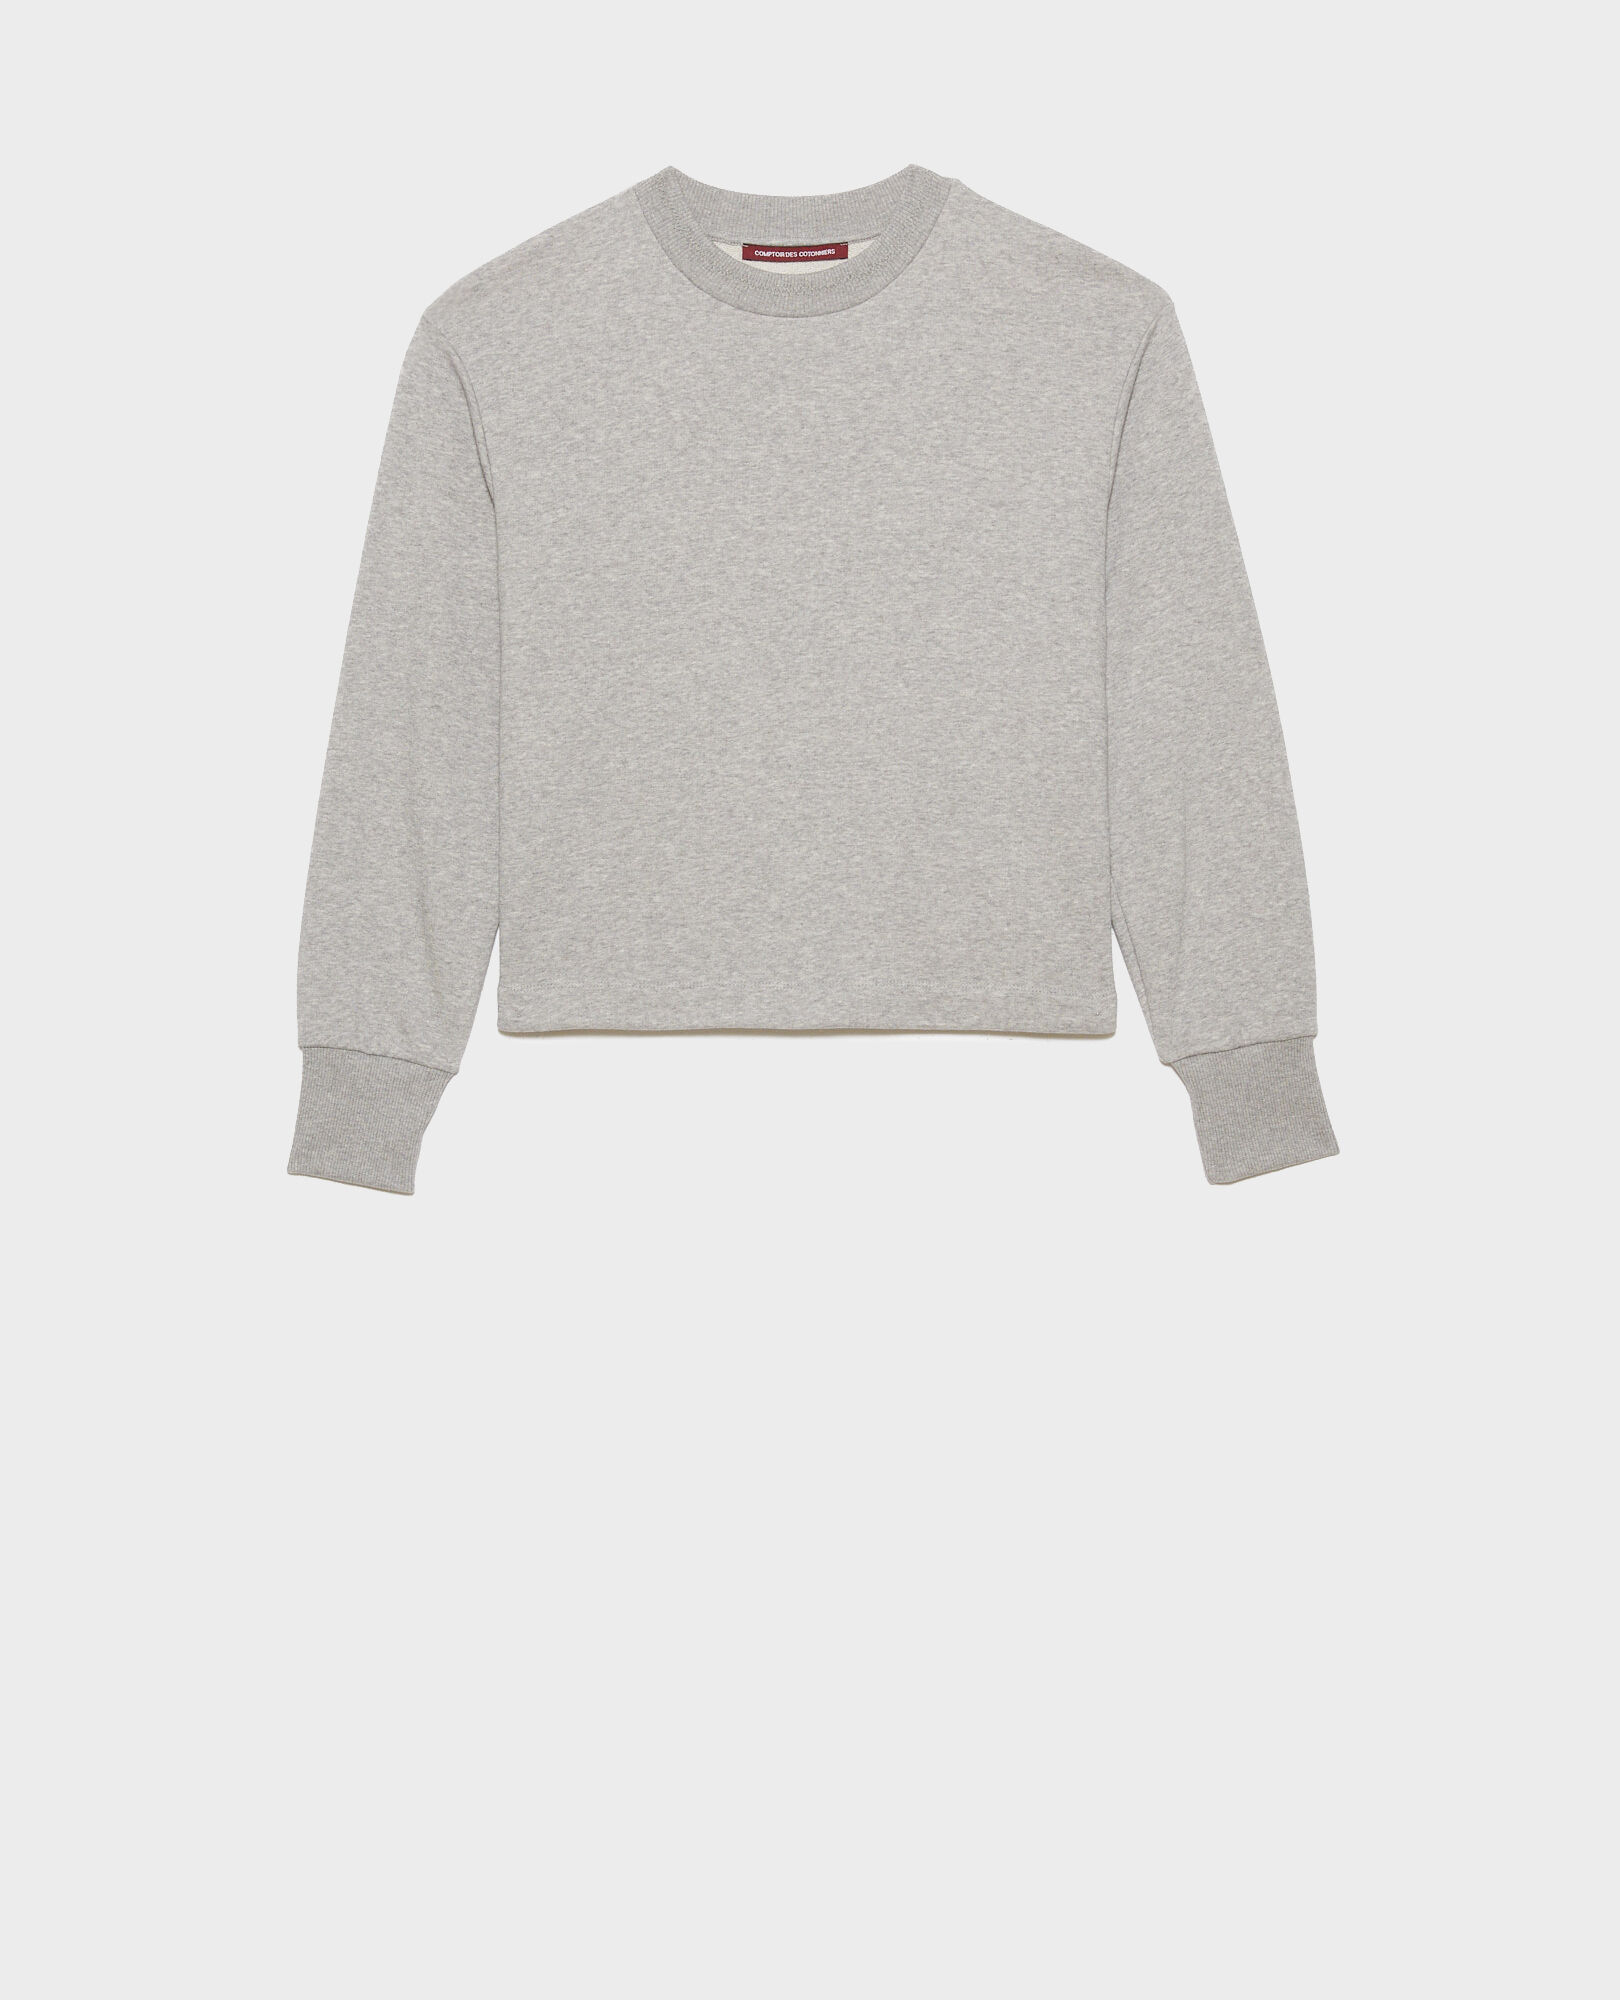 Cotton sweatshirt 03 greymelange 2sho840c30